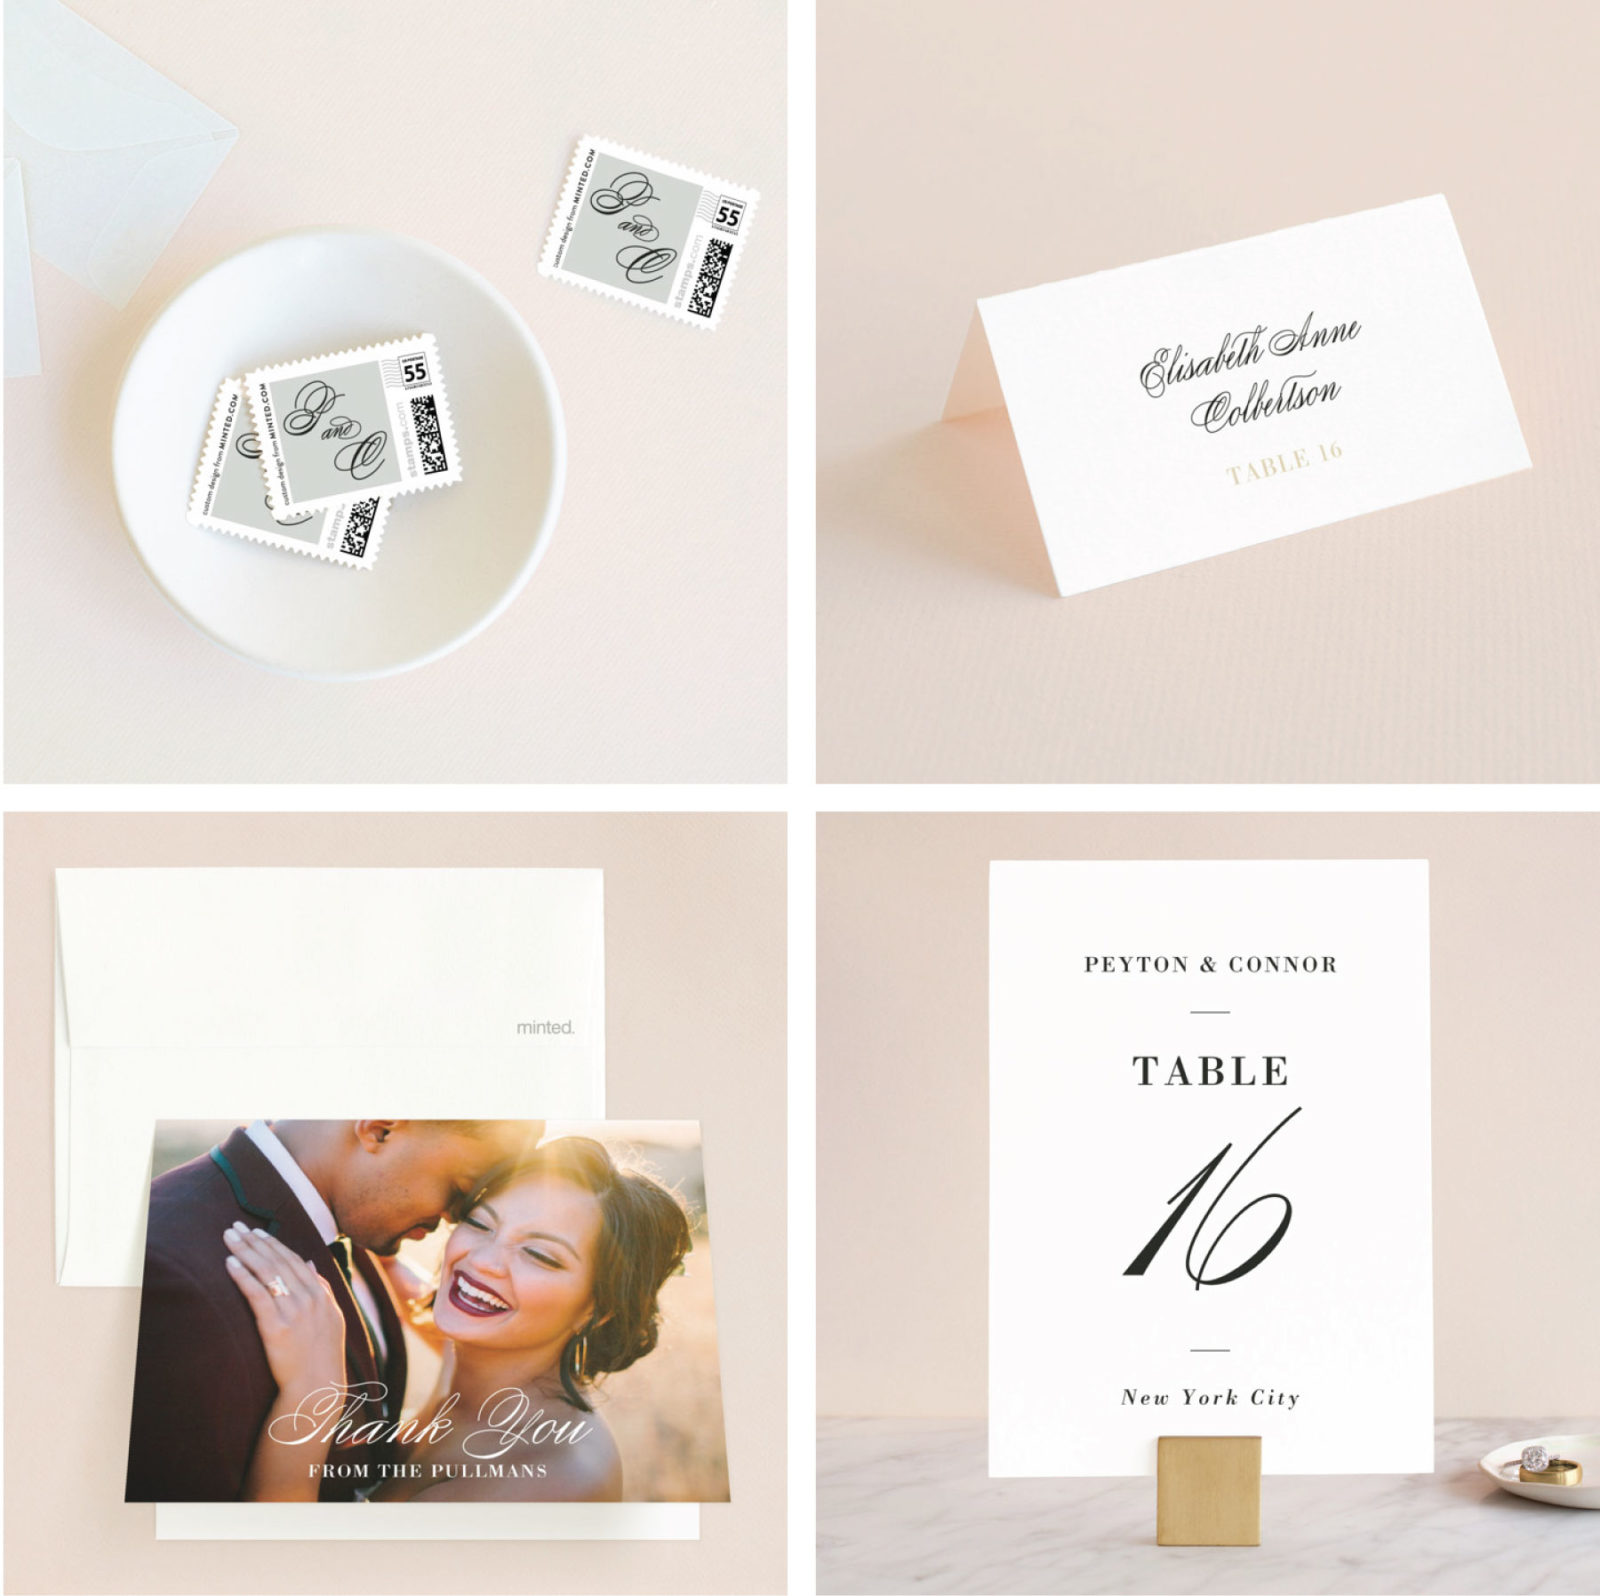 Elegant Initials Wedding Paper Goods